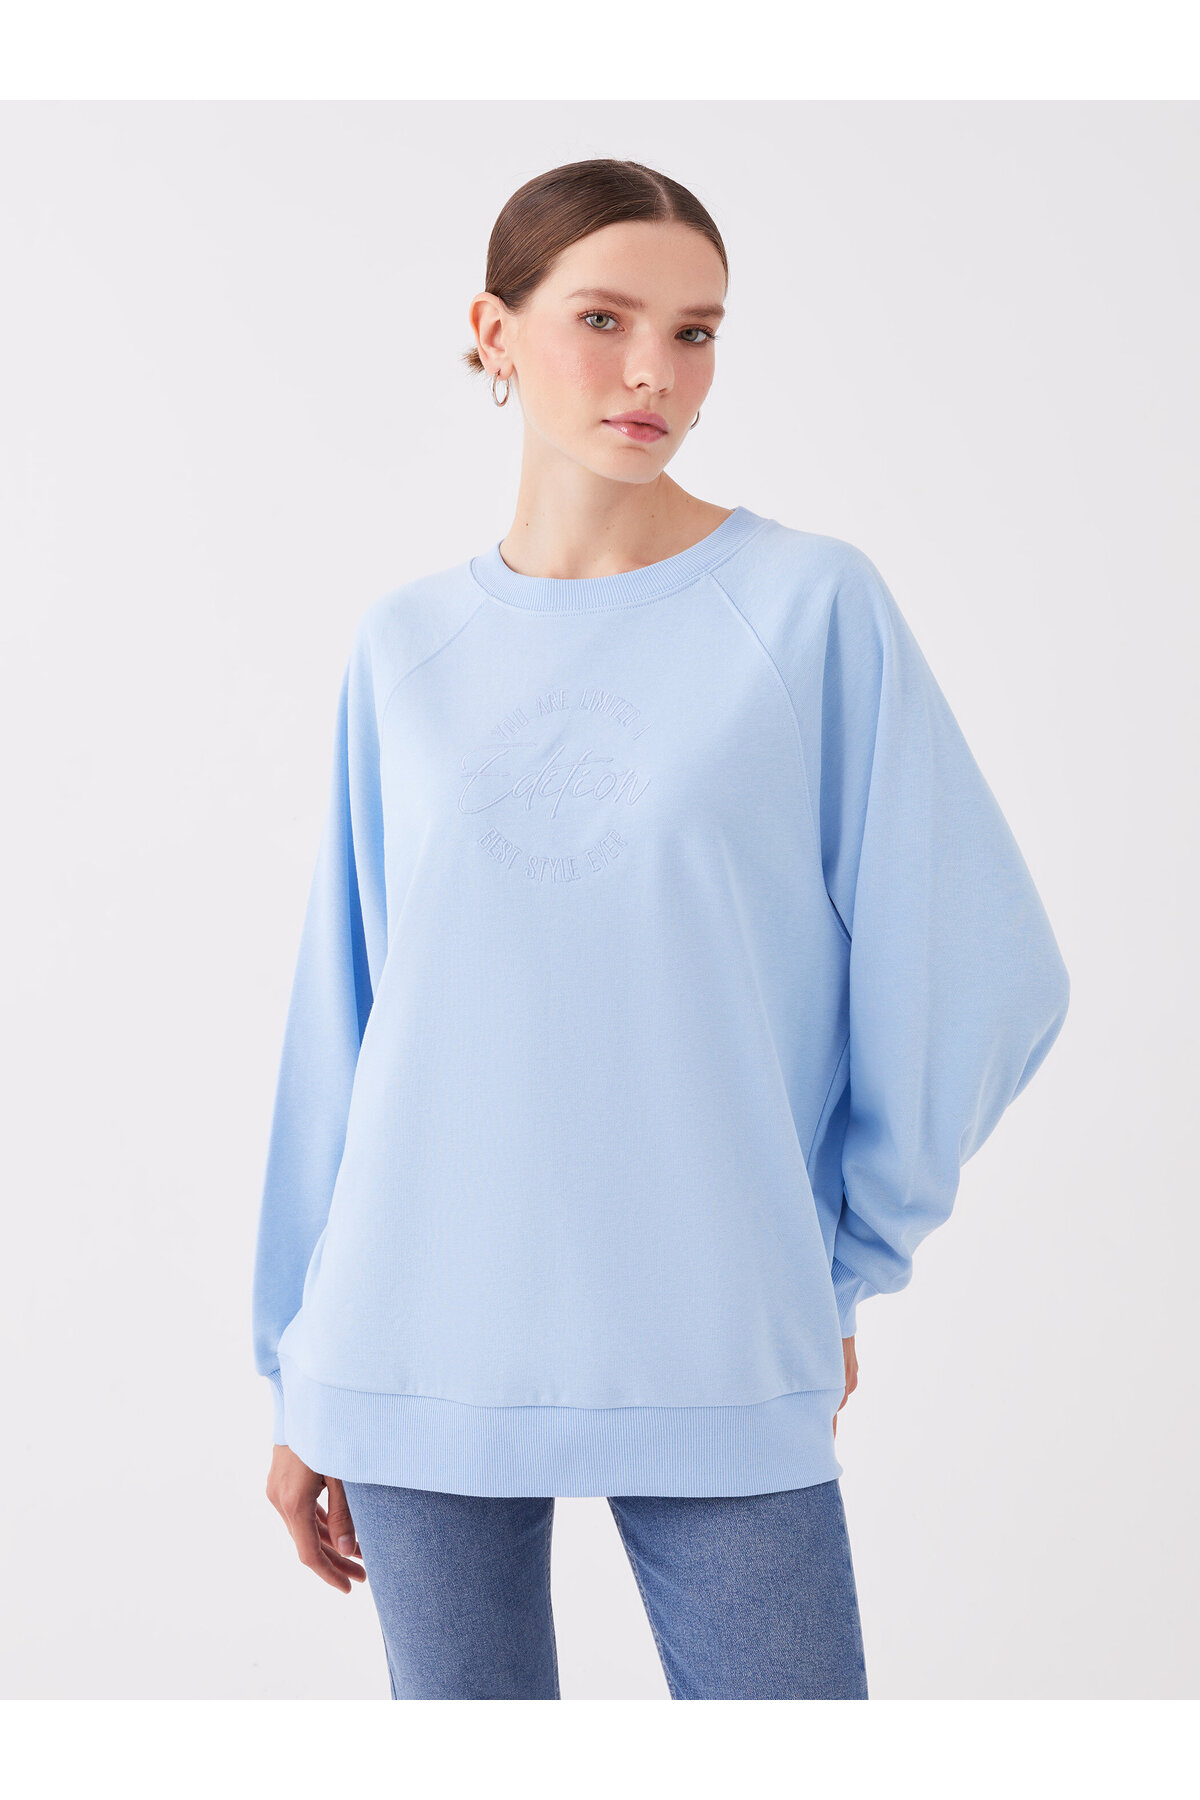 Crew Neck Embroidered Long Sleeve Oversize Women's Sweatshirt